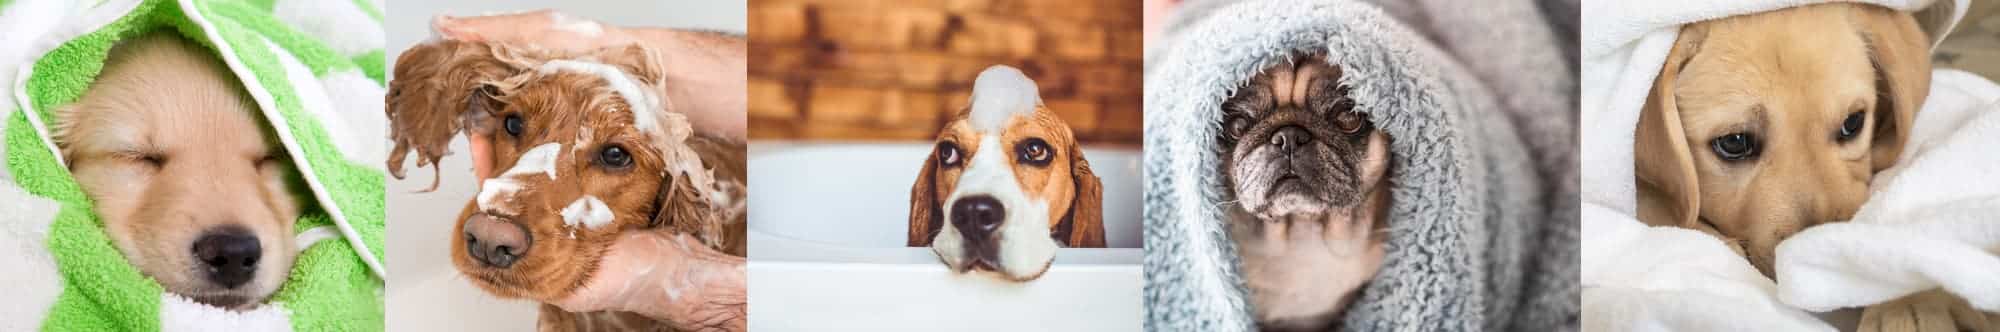 dog-wash-tubs-clean-pet